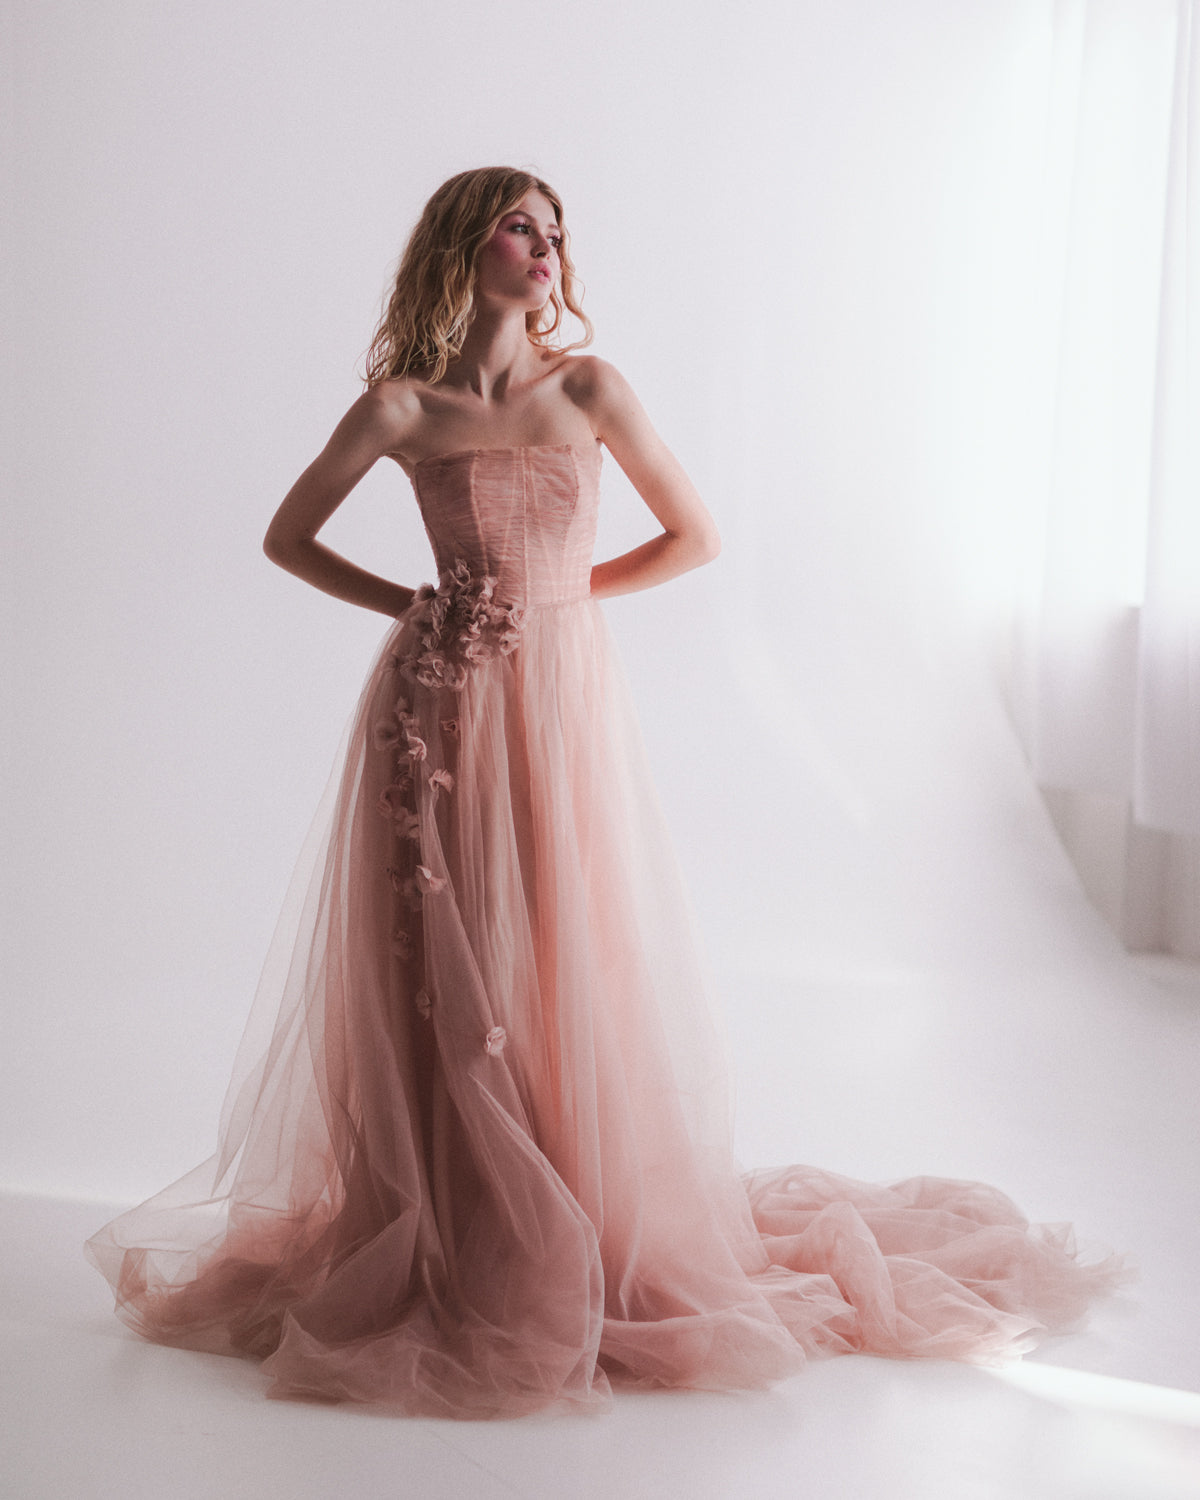 Colourful Wedding Dresses: 27 Best Looks + Expert Tips | Pink wedding  dresses, Peach blush wedding dress, Wedding dresses blush